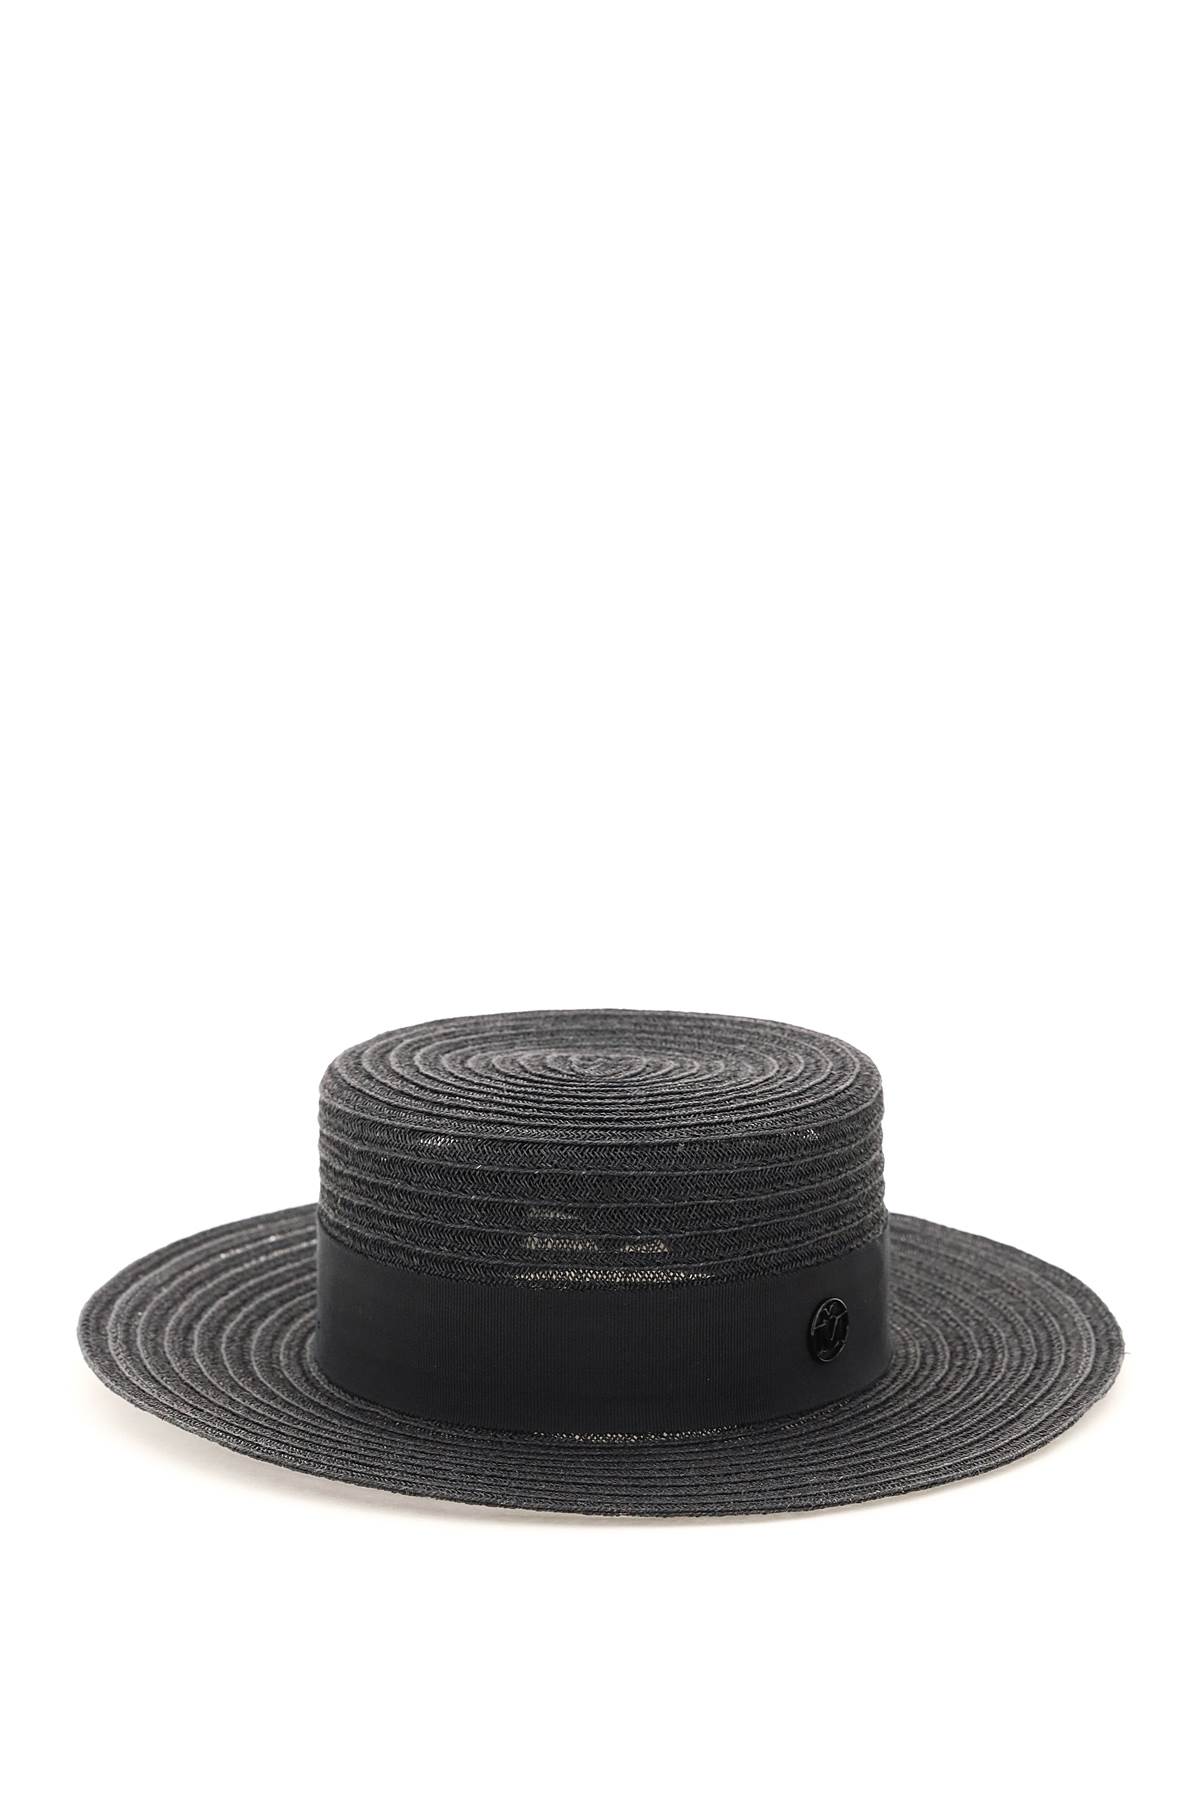 Maison Michel kiki Hemp Canotier Hat